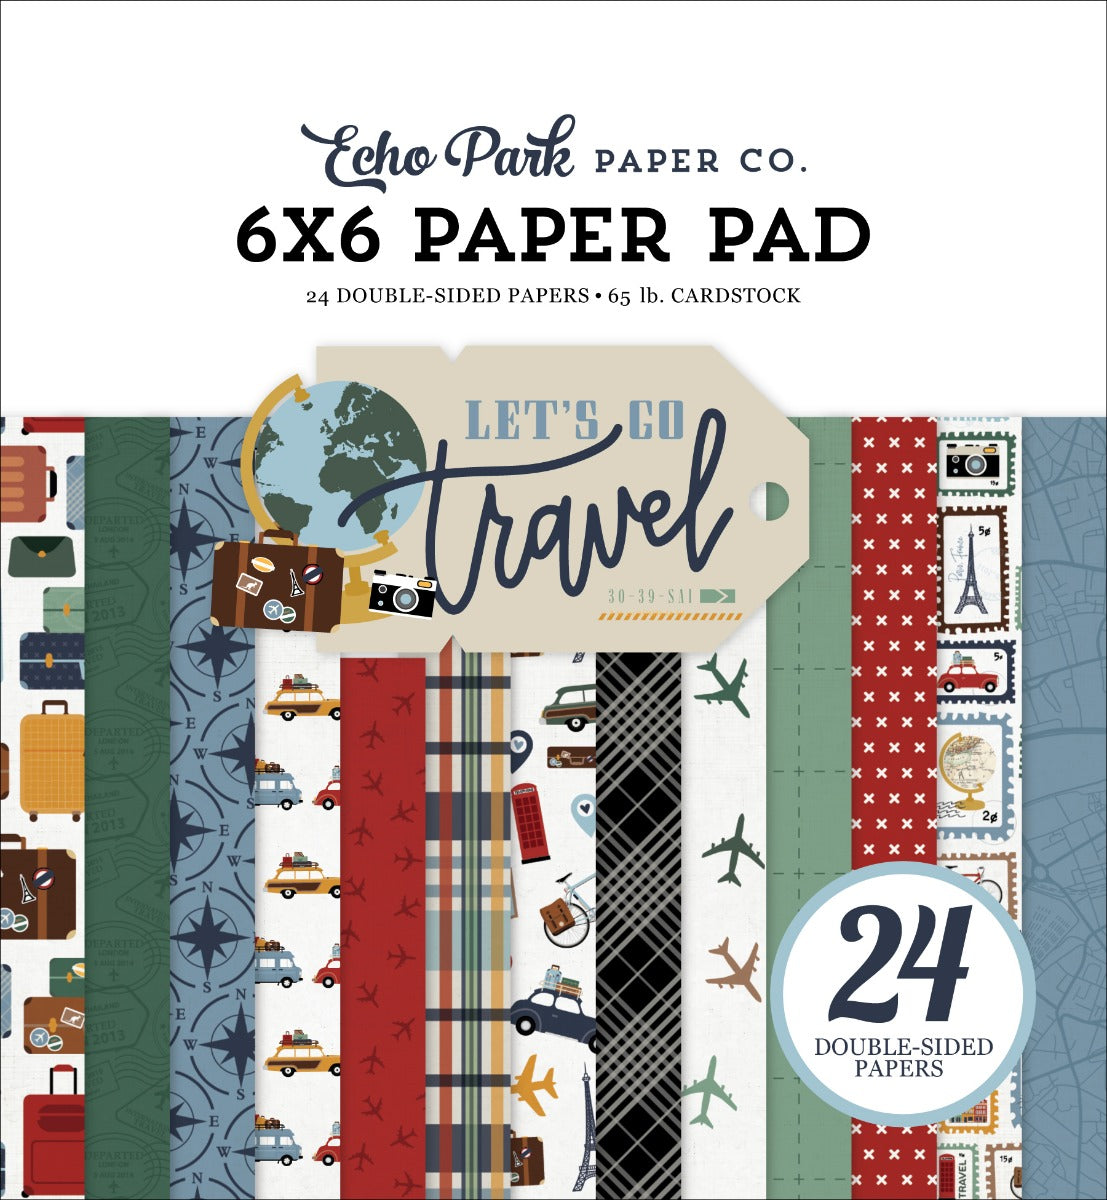 Let's Go Travel Adhesive Brads - Echo Park Paper Co.